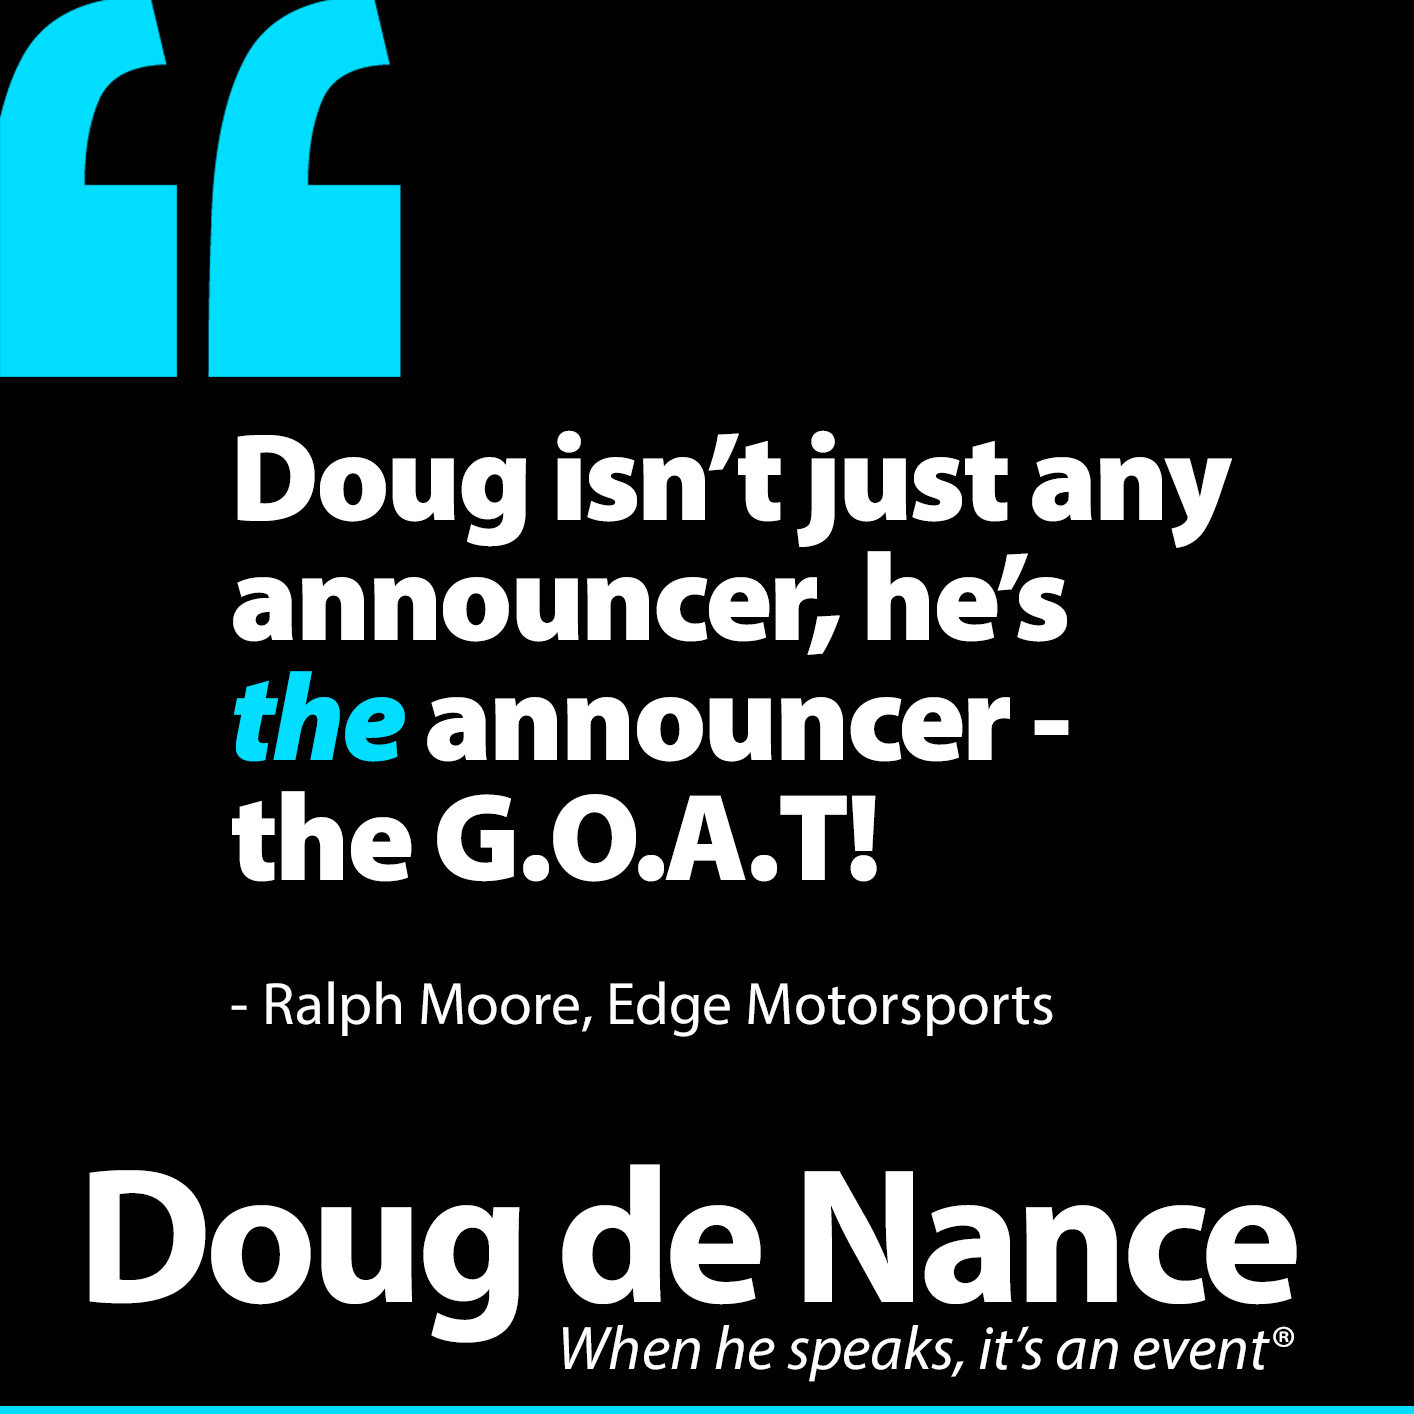 Doug de Nance is the G.O.A.T.